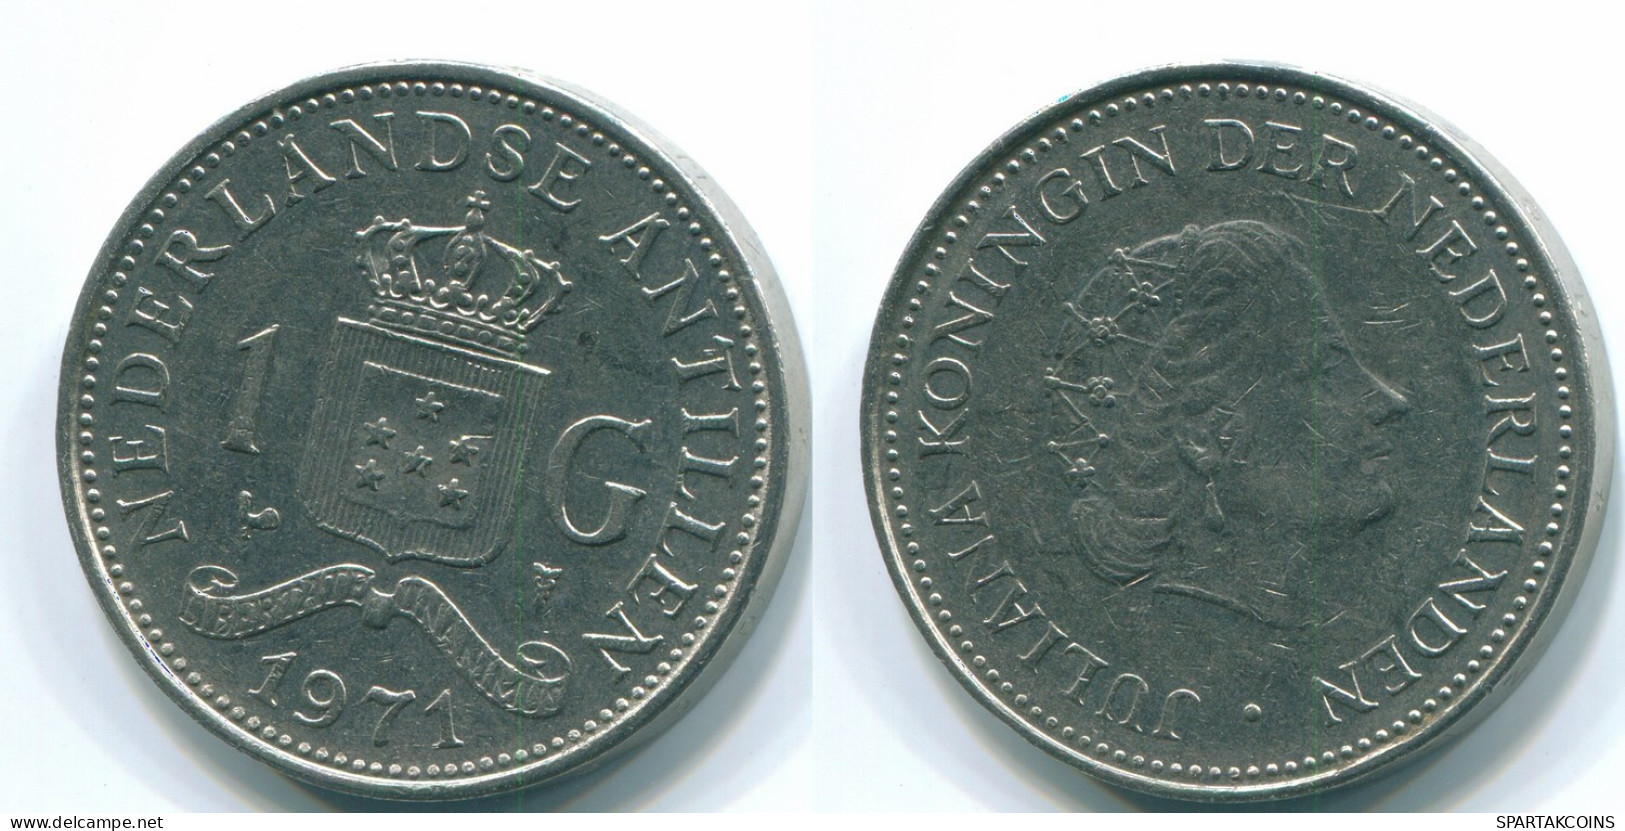 1 GULDEN 1971 NIEDERLÄNDISCHE ANTILLEN Nickel Koloniale Münze #S12025.D.A - Antilles Néerlandaises